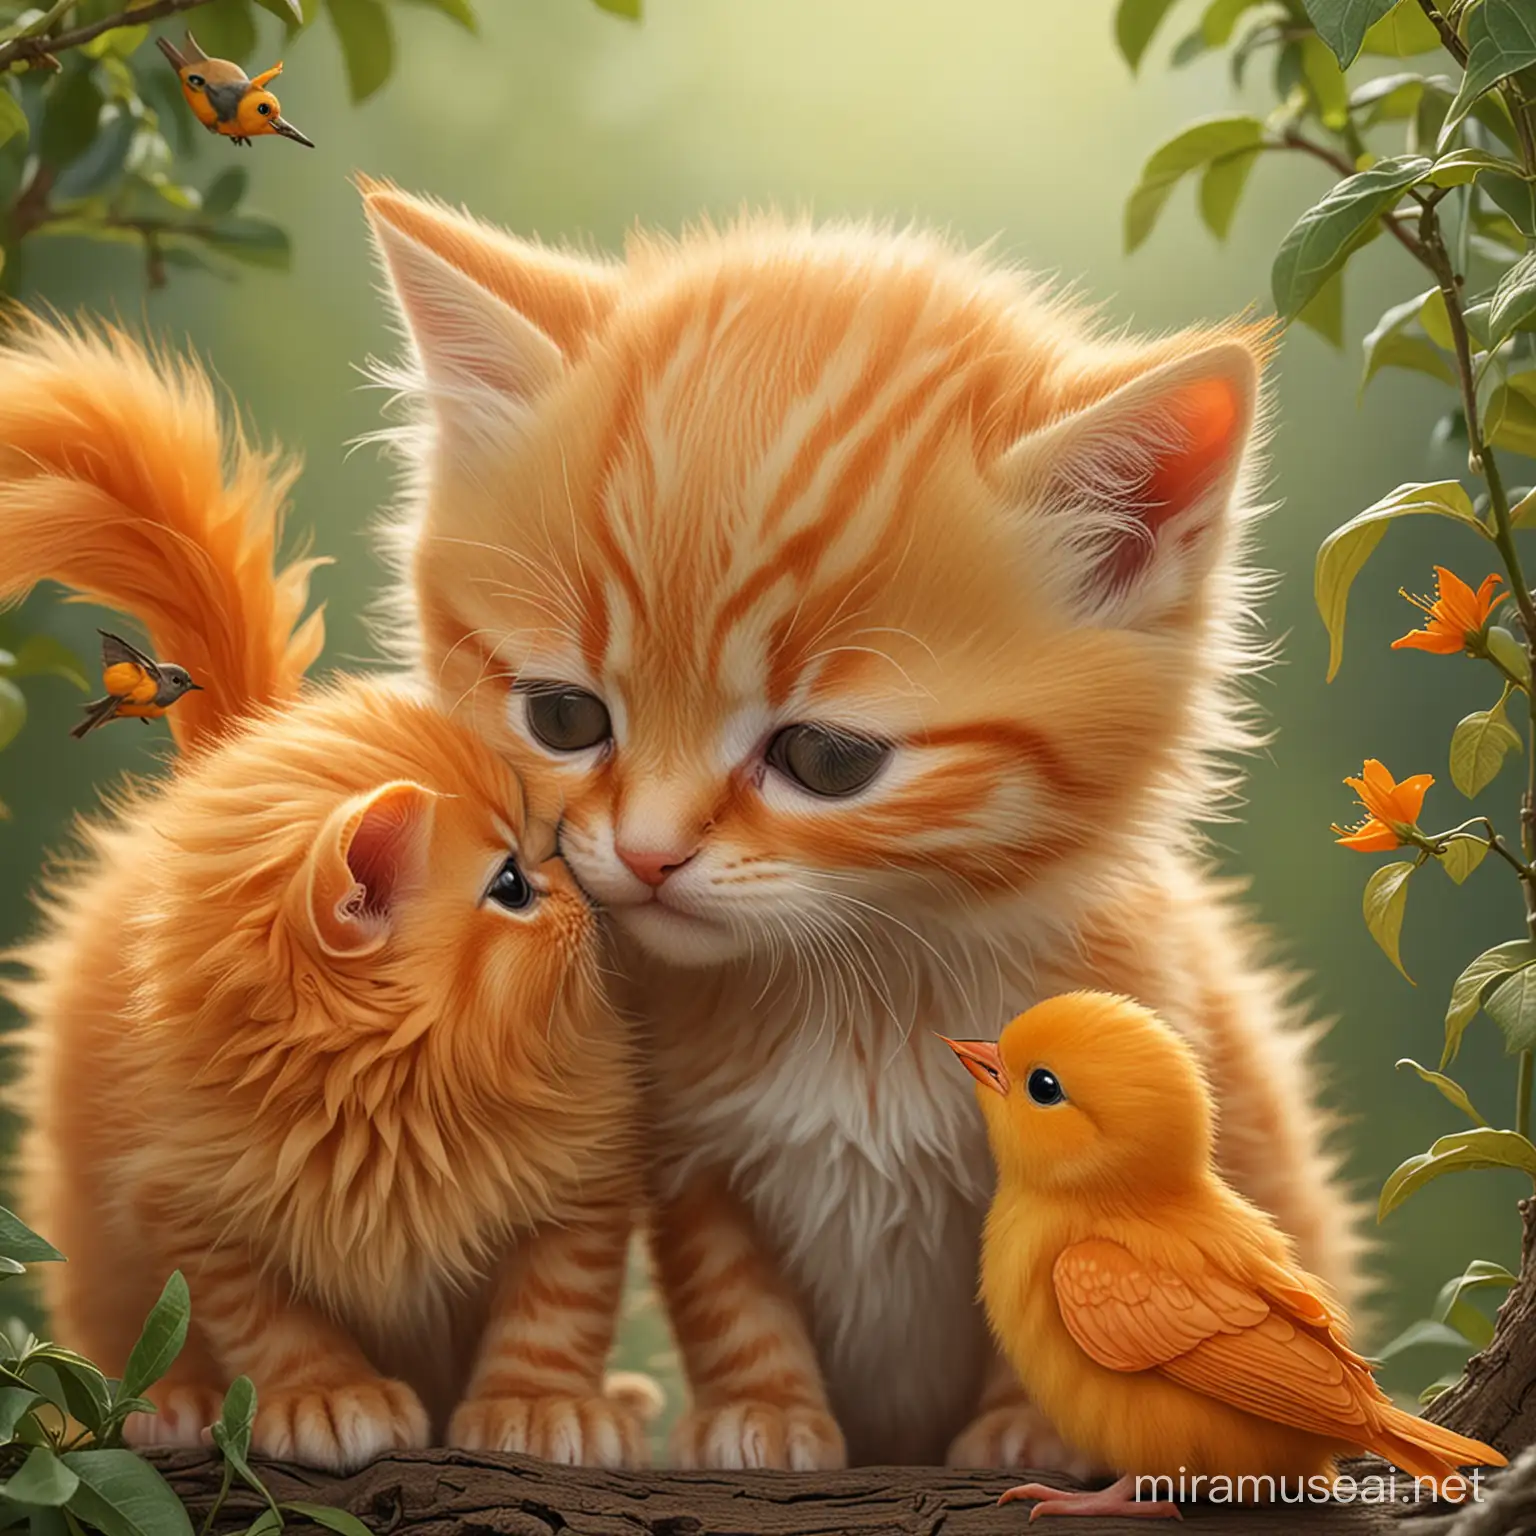 Intricate details, image of a small cute little orange kitten whispering to a cute little orange bird